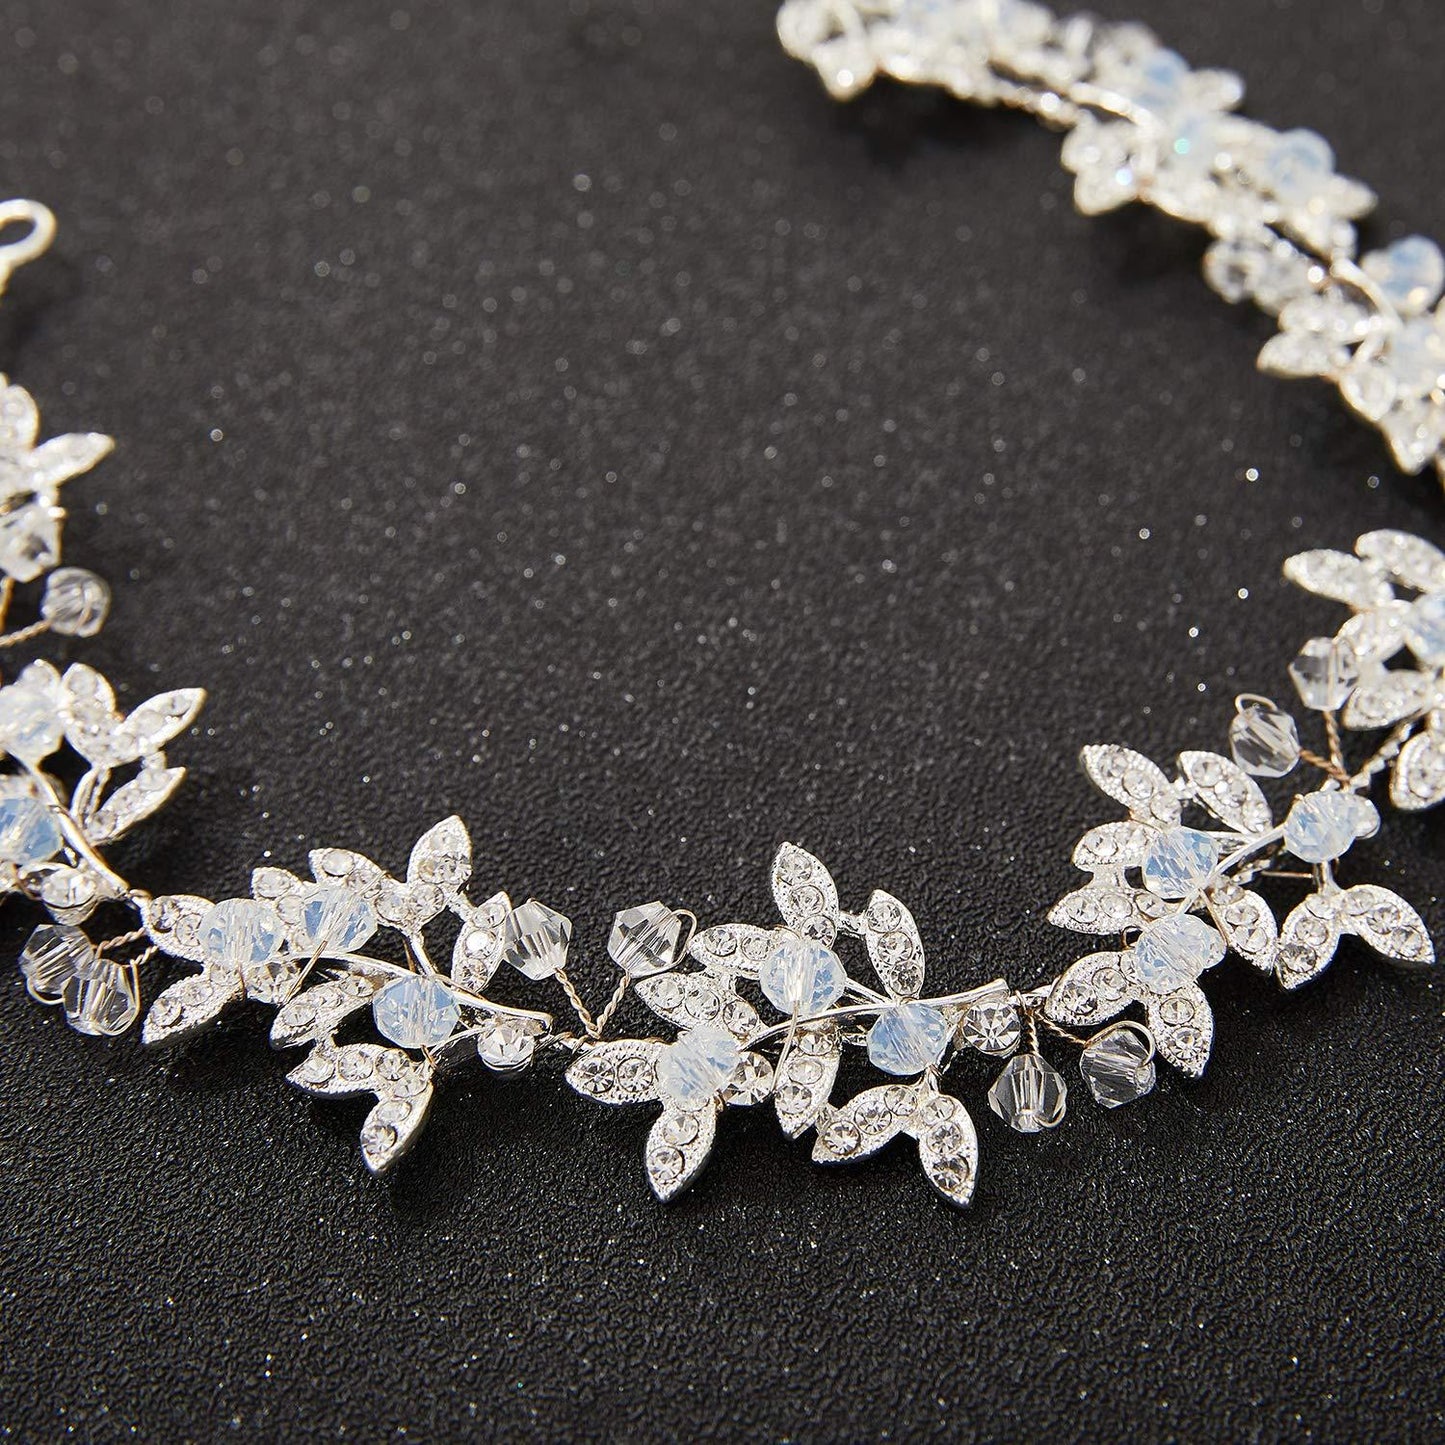 Silver Rhinestone Wedding Headband Tiara Crystal Headpiece Bridal Hair Accessories for Bride - If you say i do